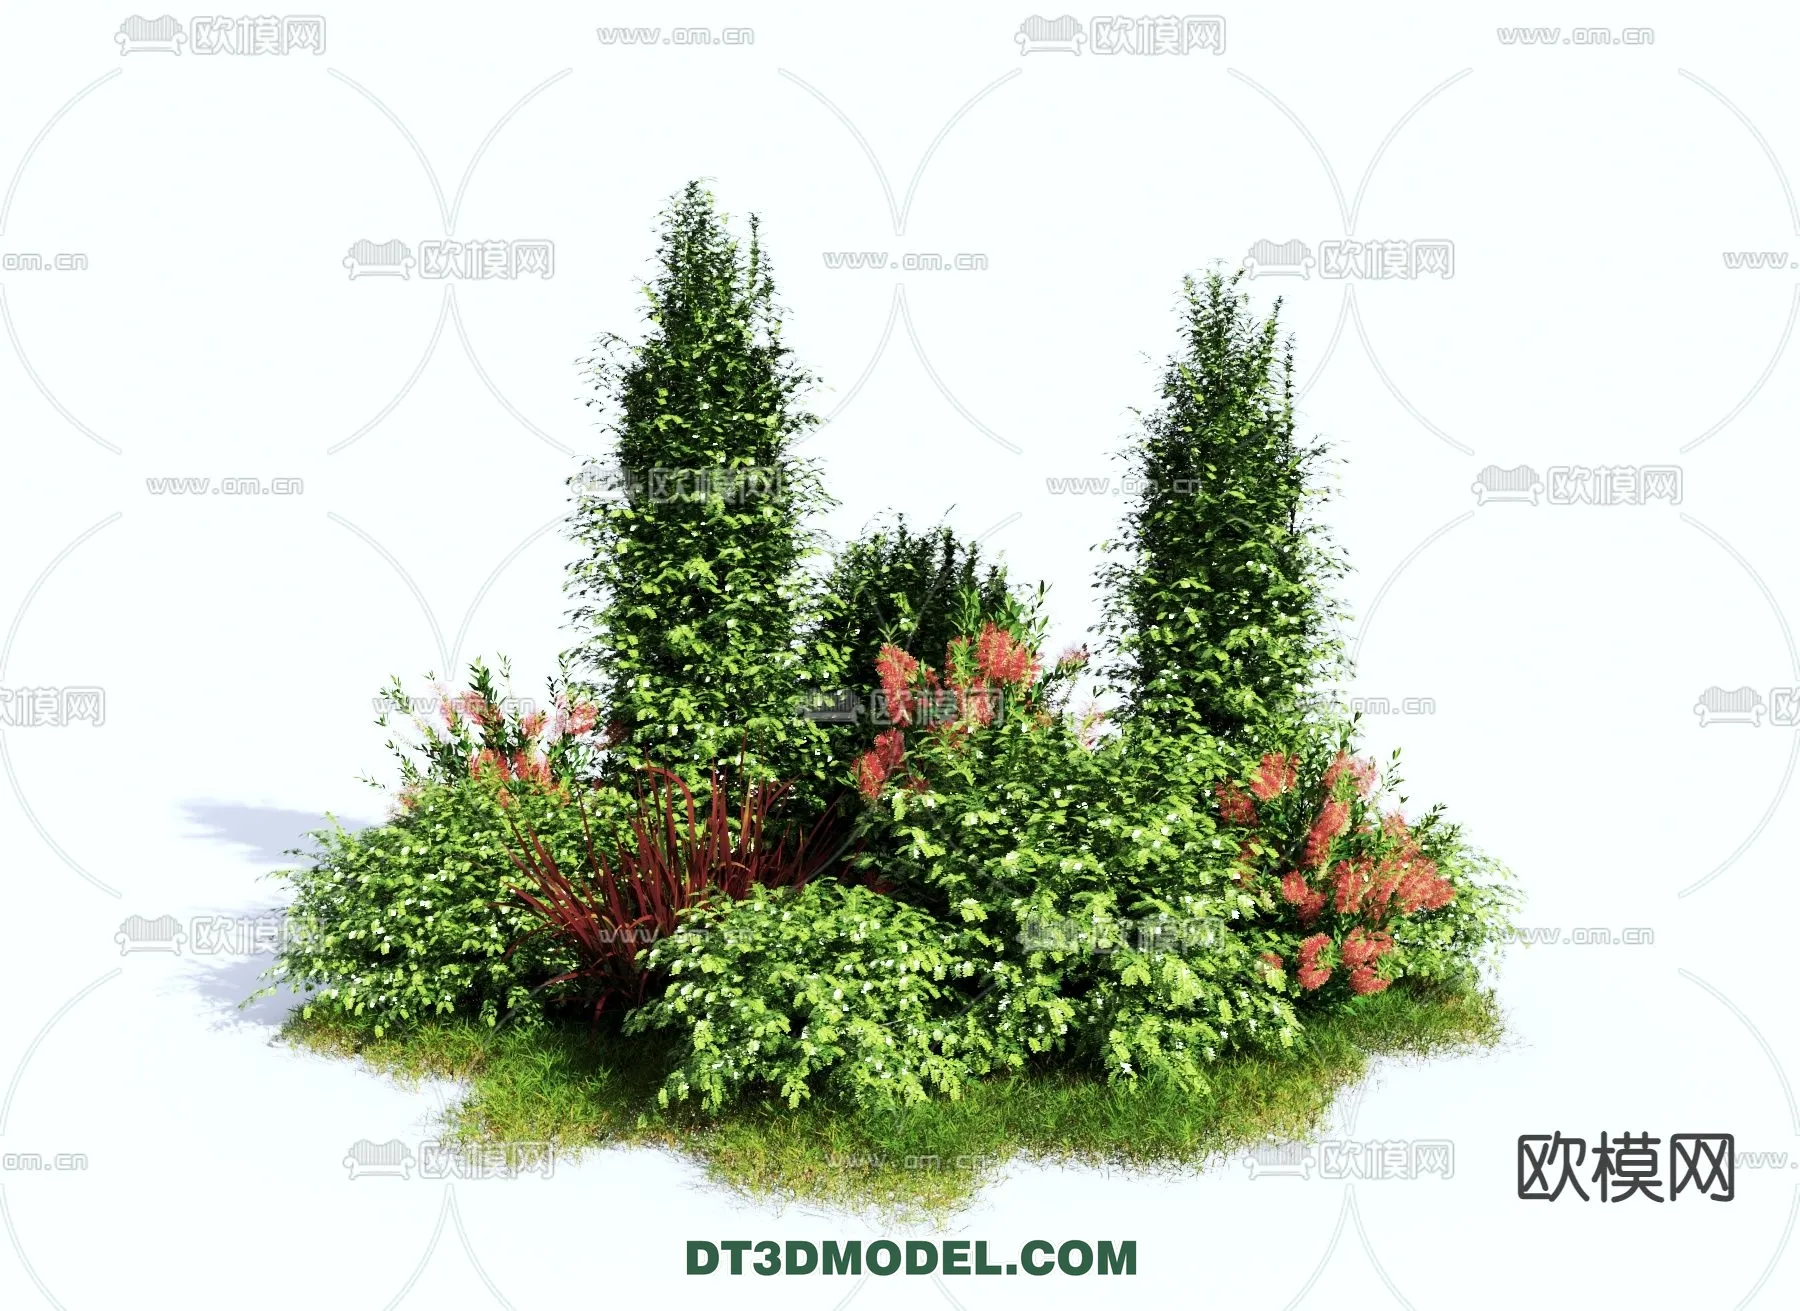 PLANTS – BUSH – VRAY / CORONA – 3D MODEL – 300